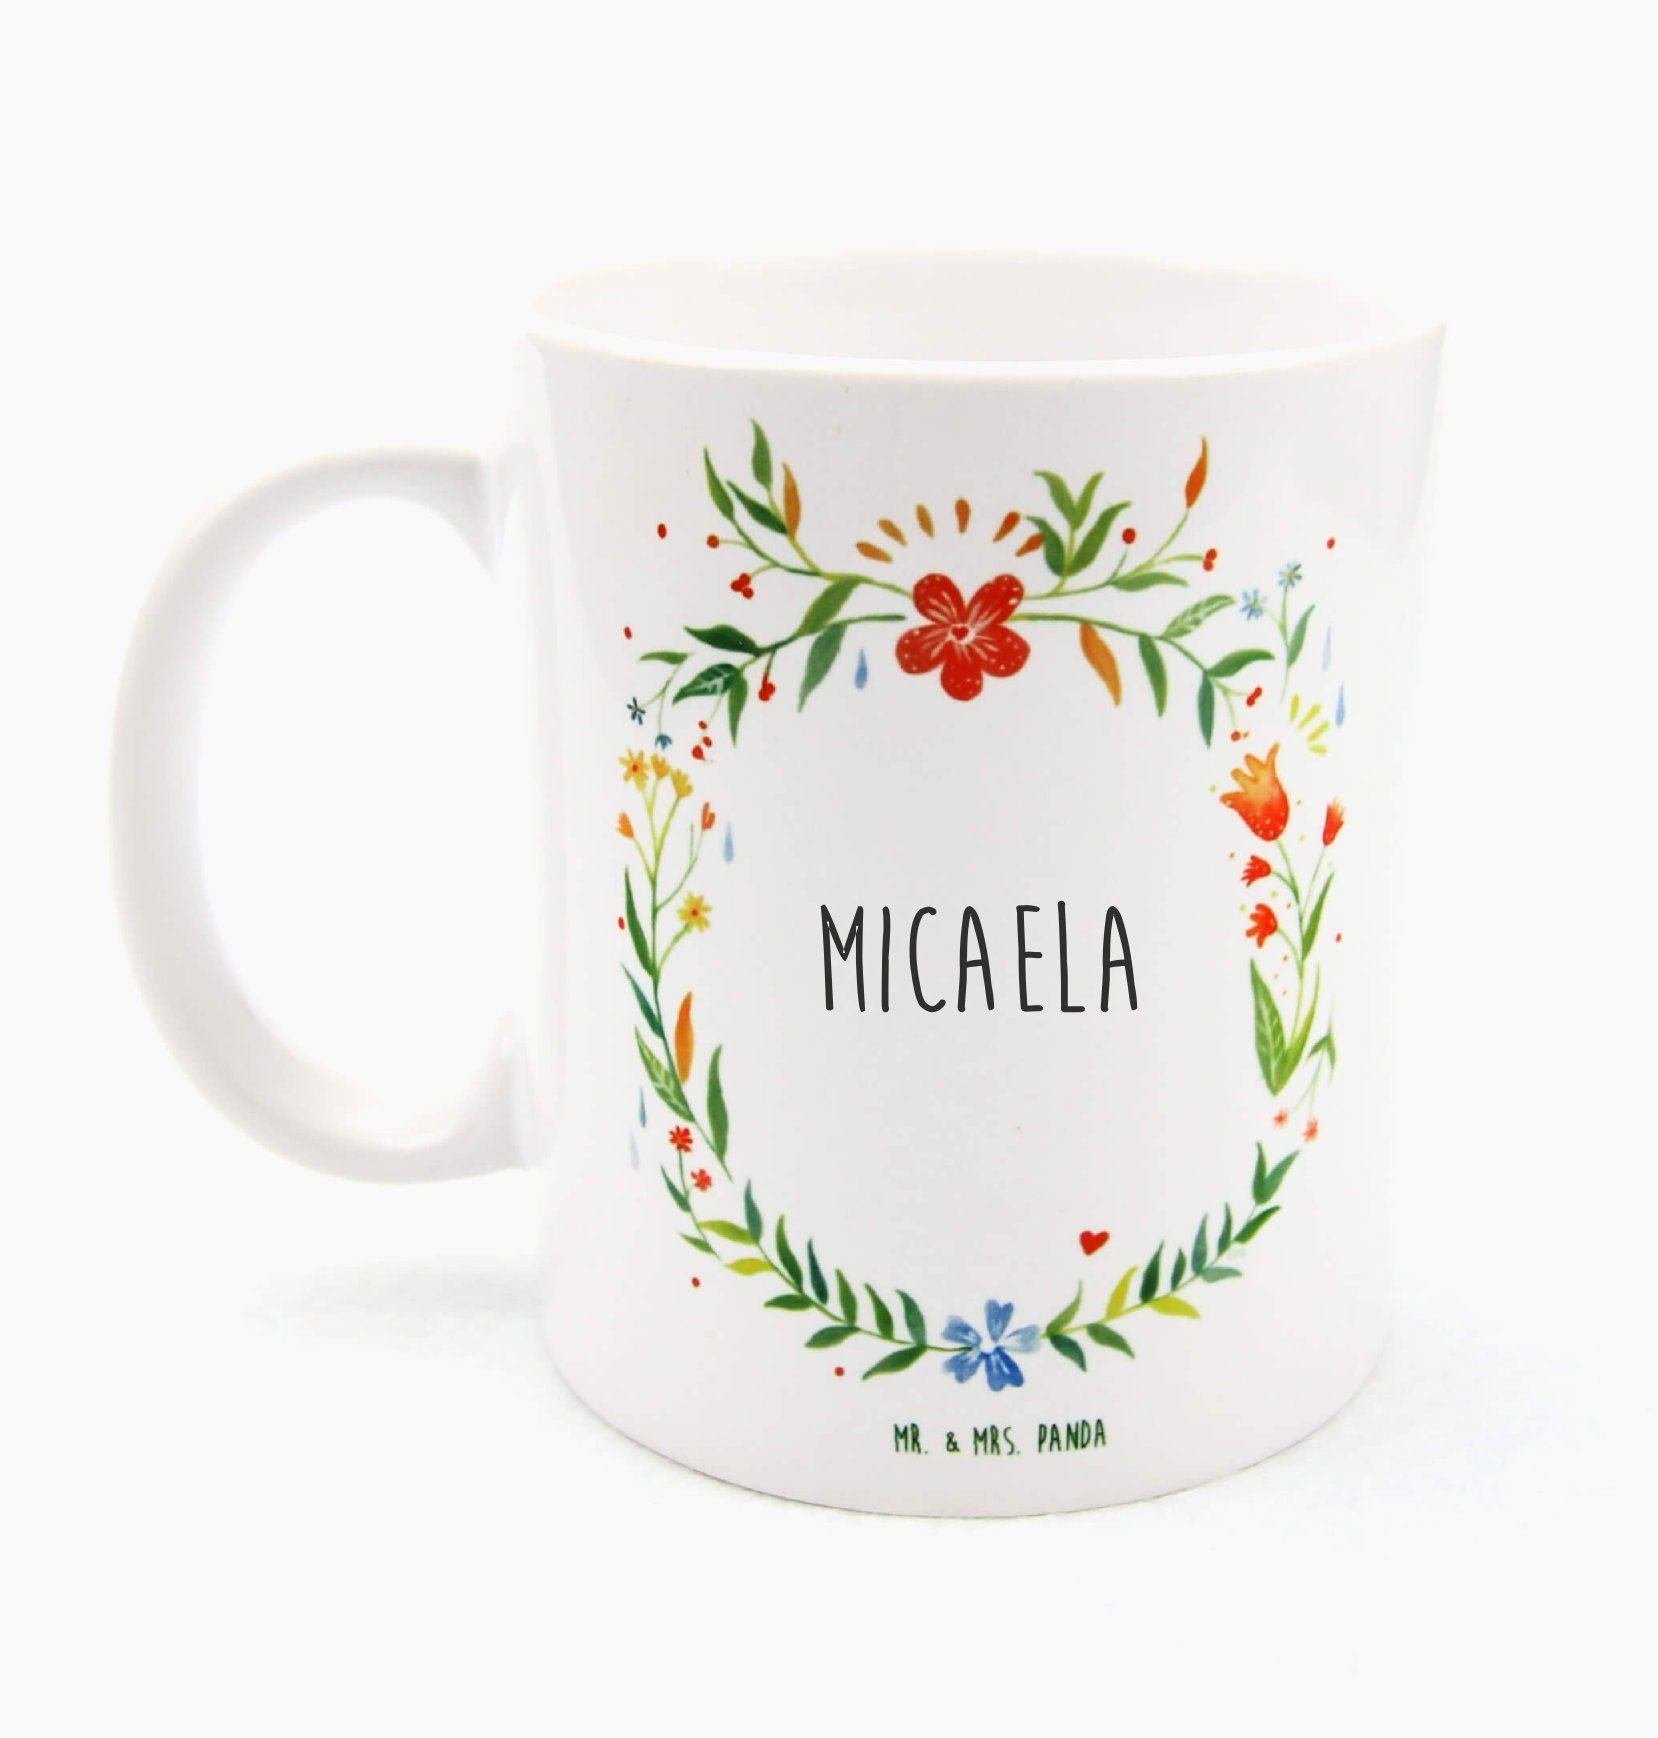 Mr. & Mrs. Panda Tasse Micaela - Geschenk, Kaffeebecher, Tasse Sprüche, Teetasse, Porzellant, Keramik